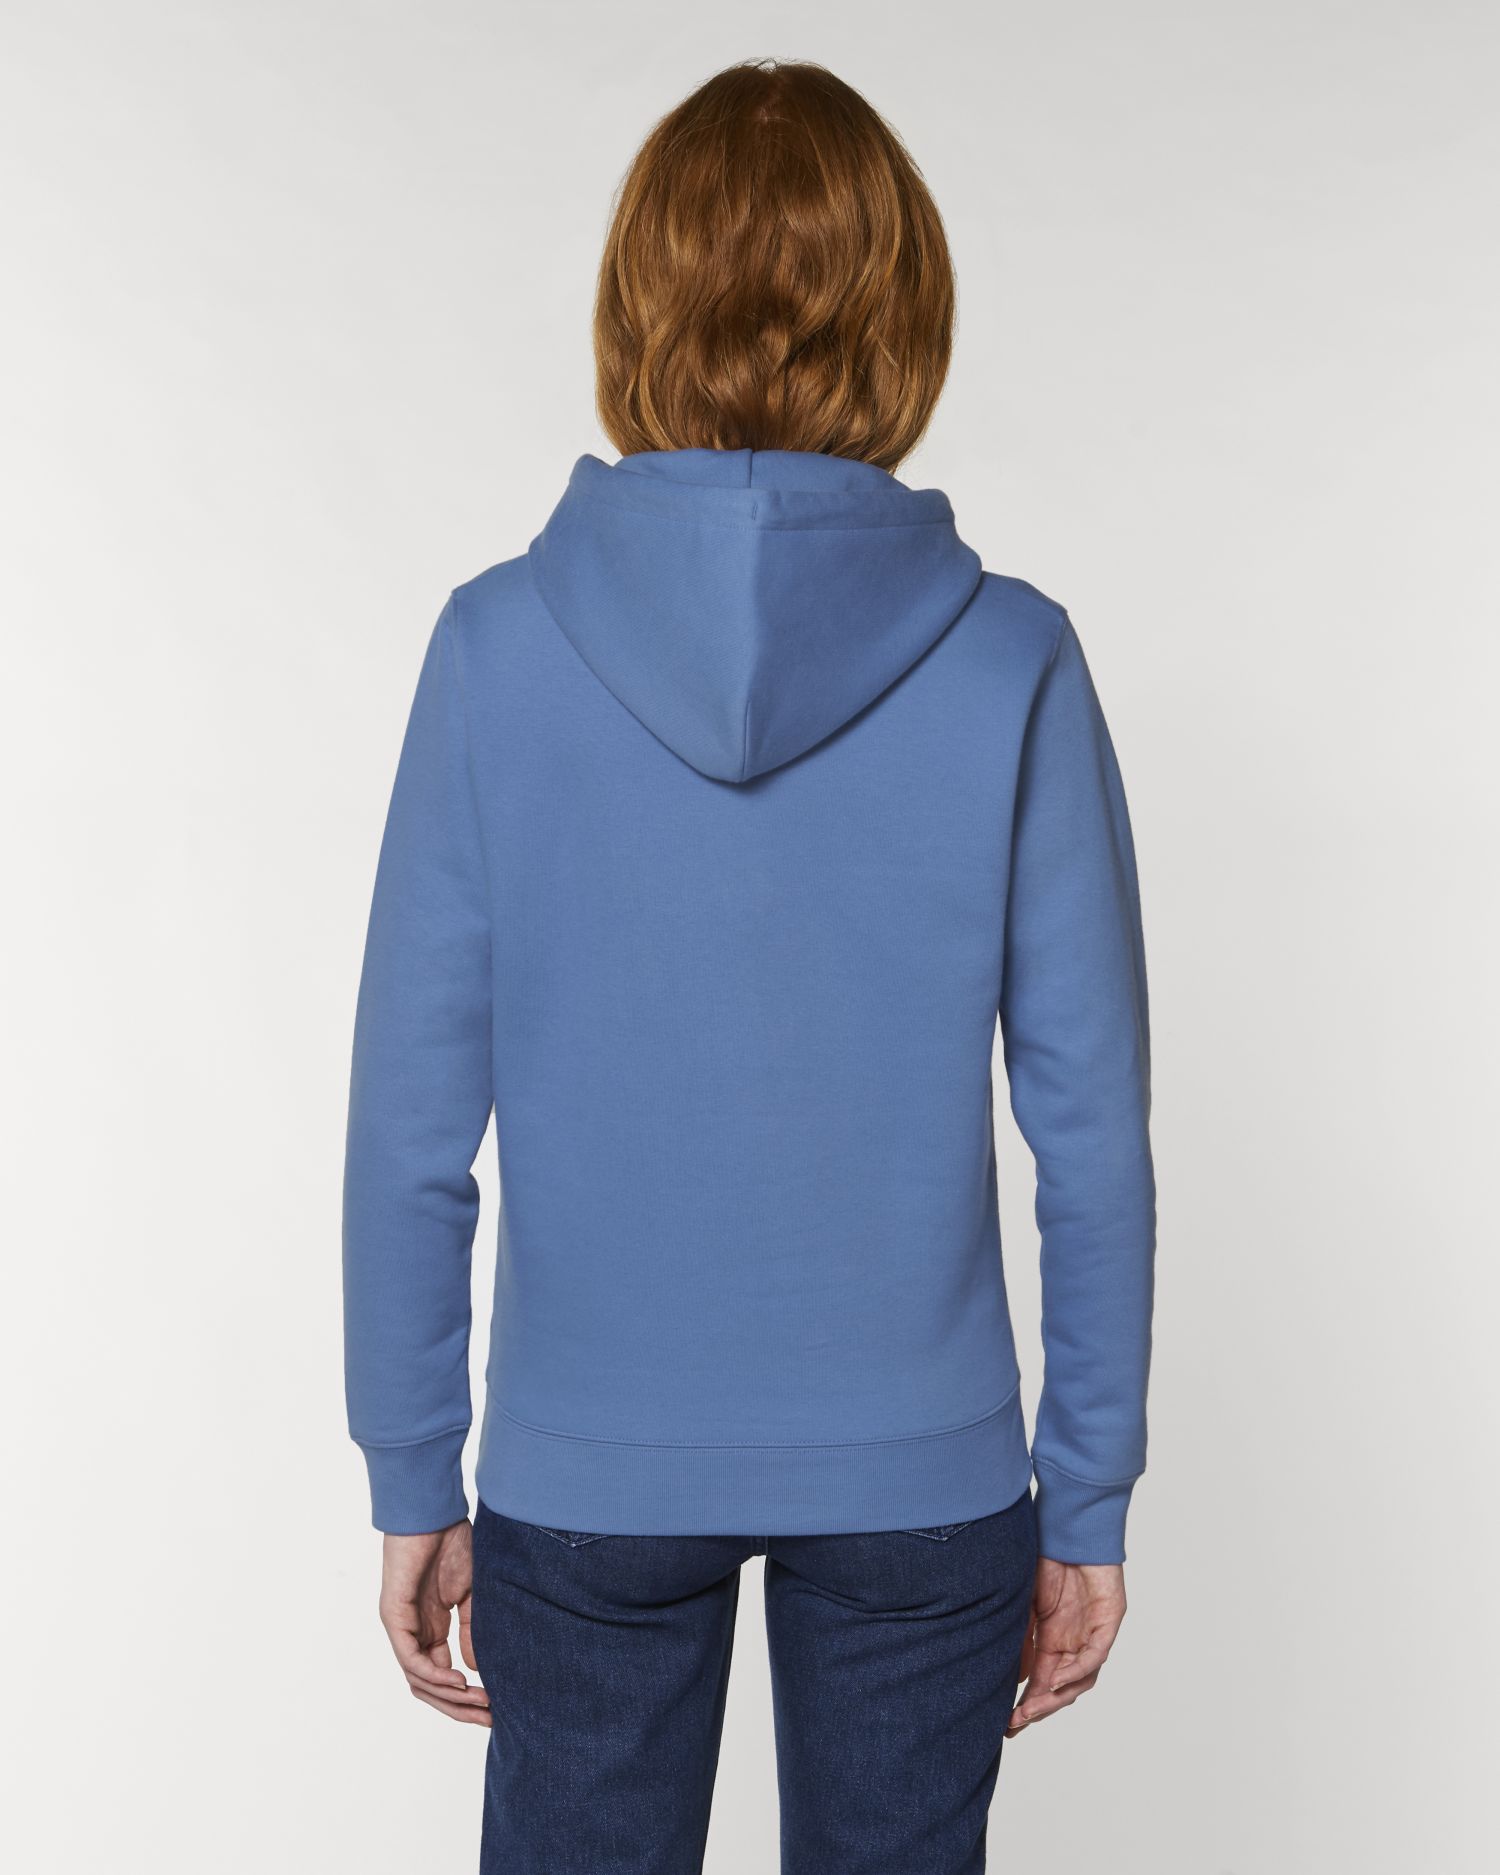 Hoodie sweatshirts Cruiser in Farbe Bright Blue